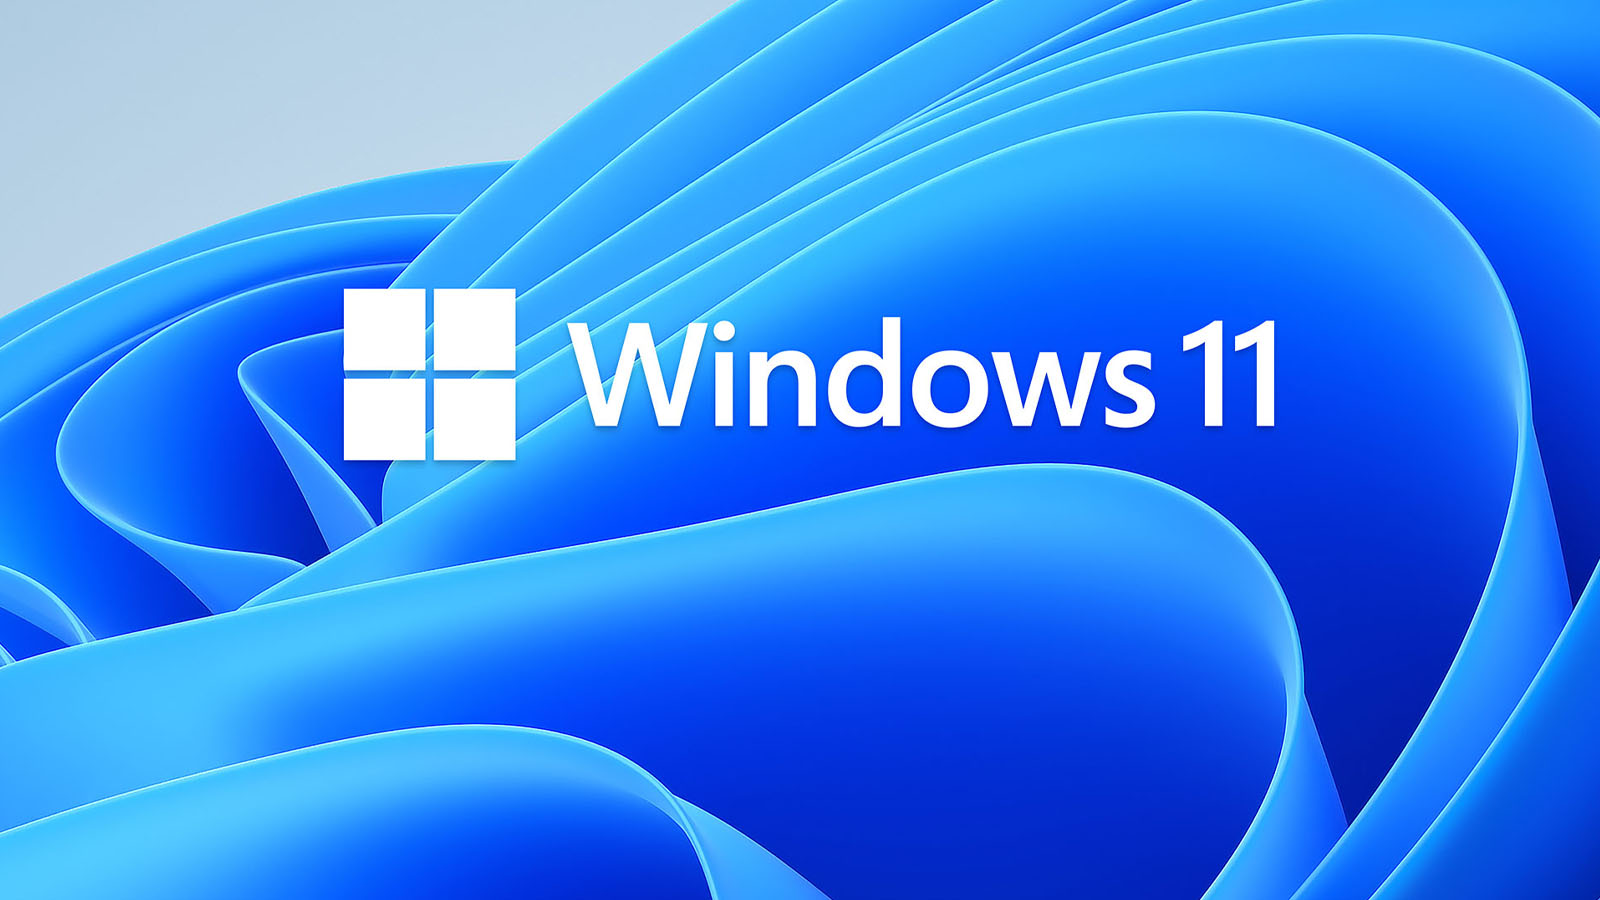 Windows 11 — Названы причины непопулярности браузера